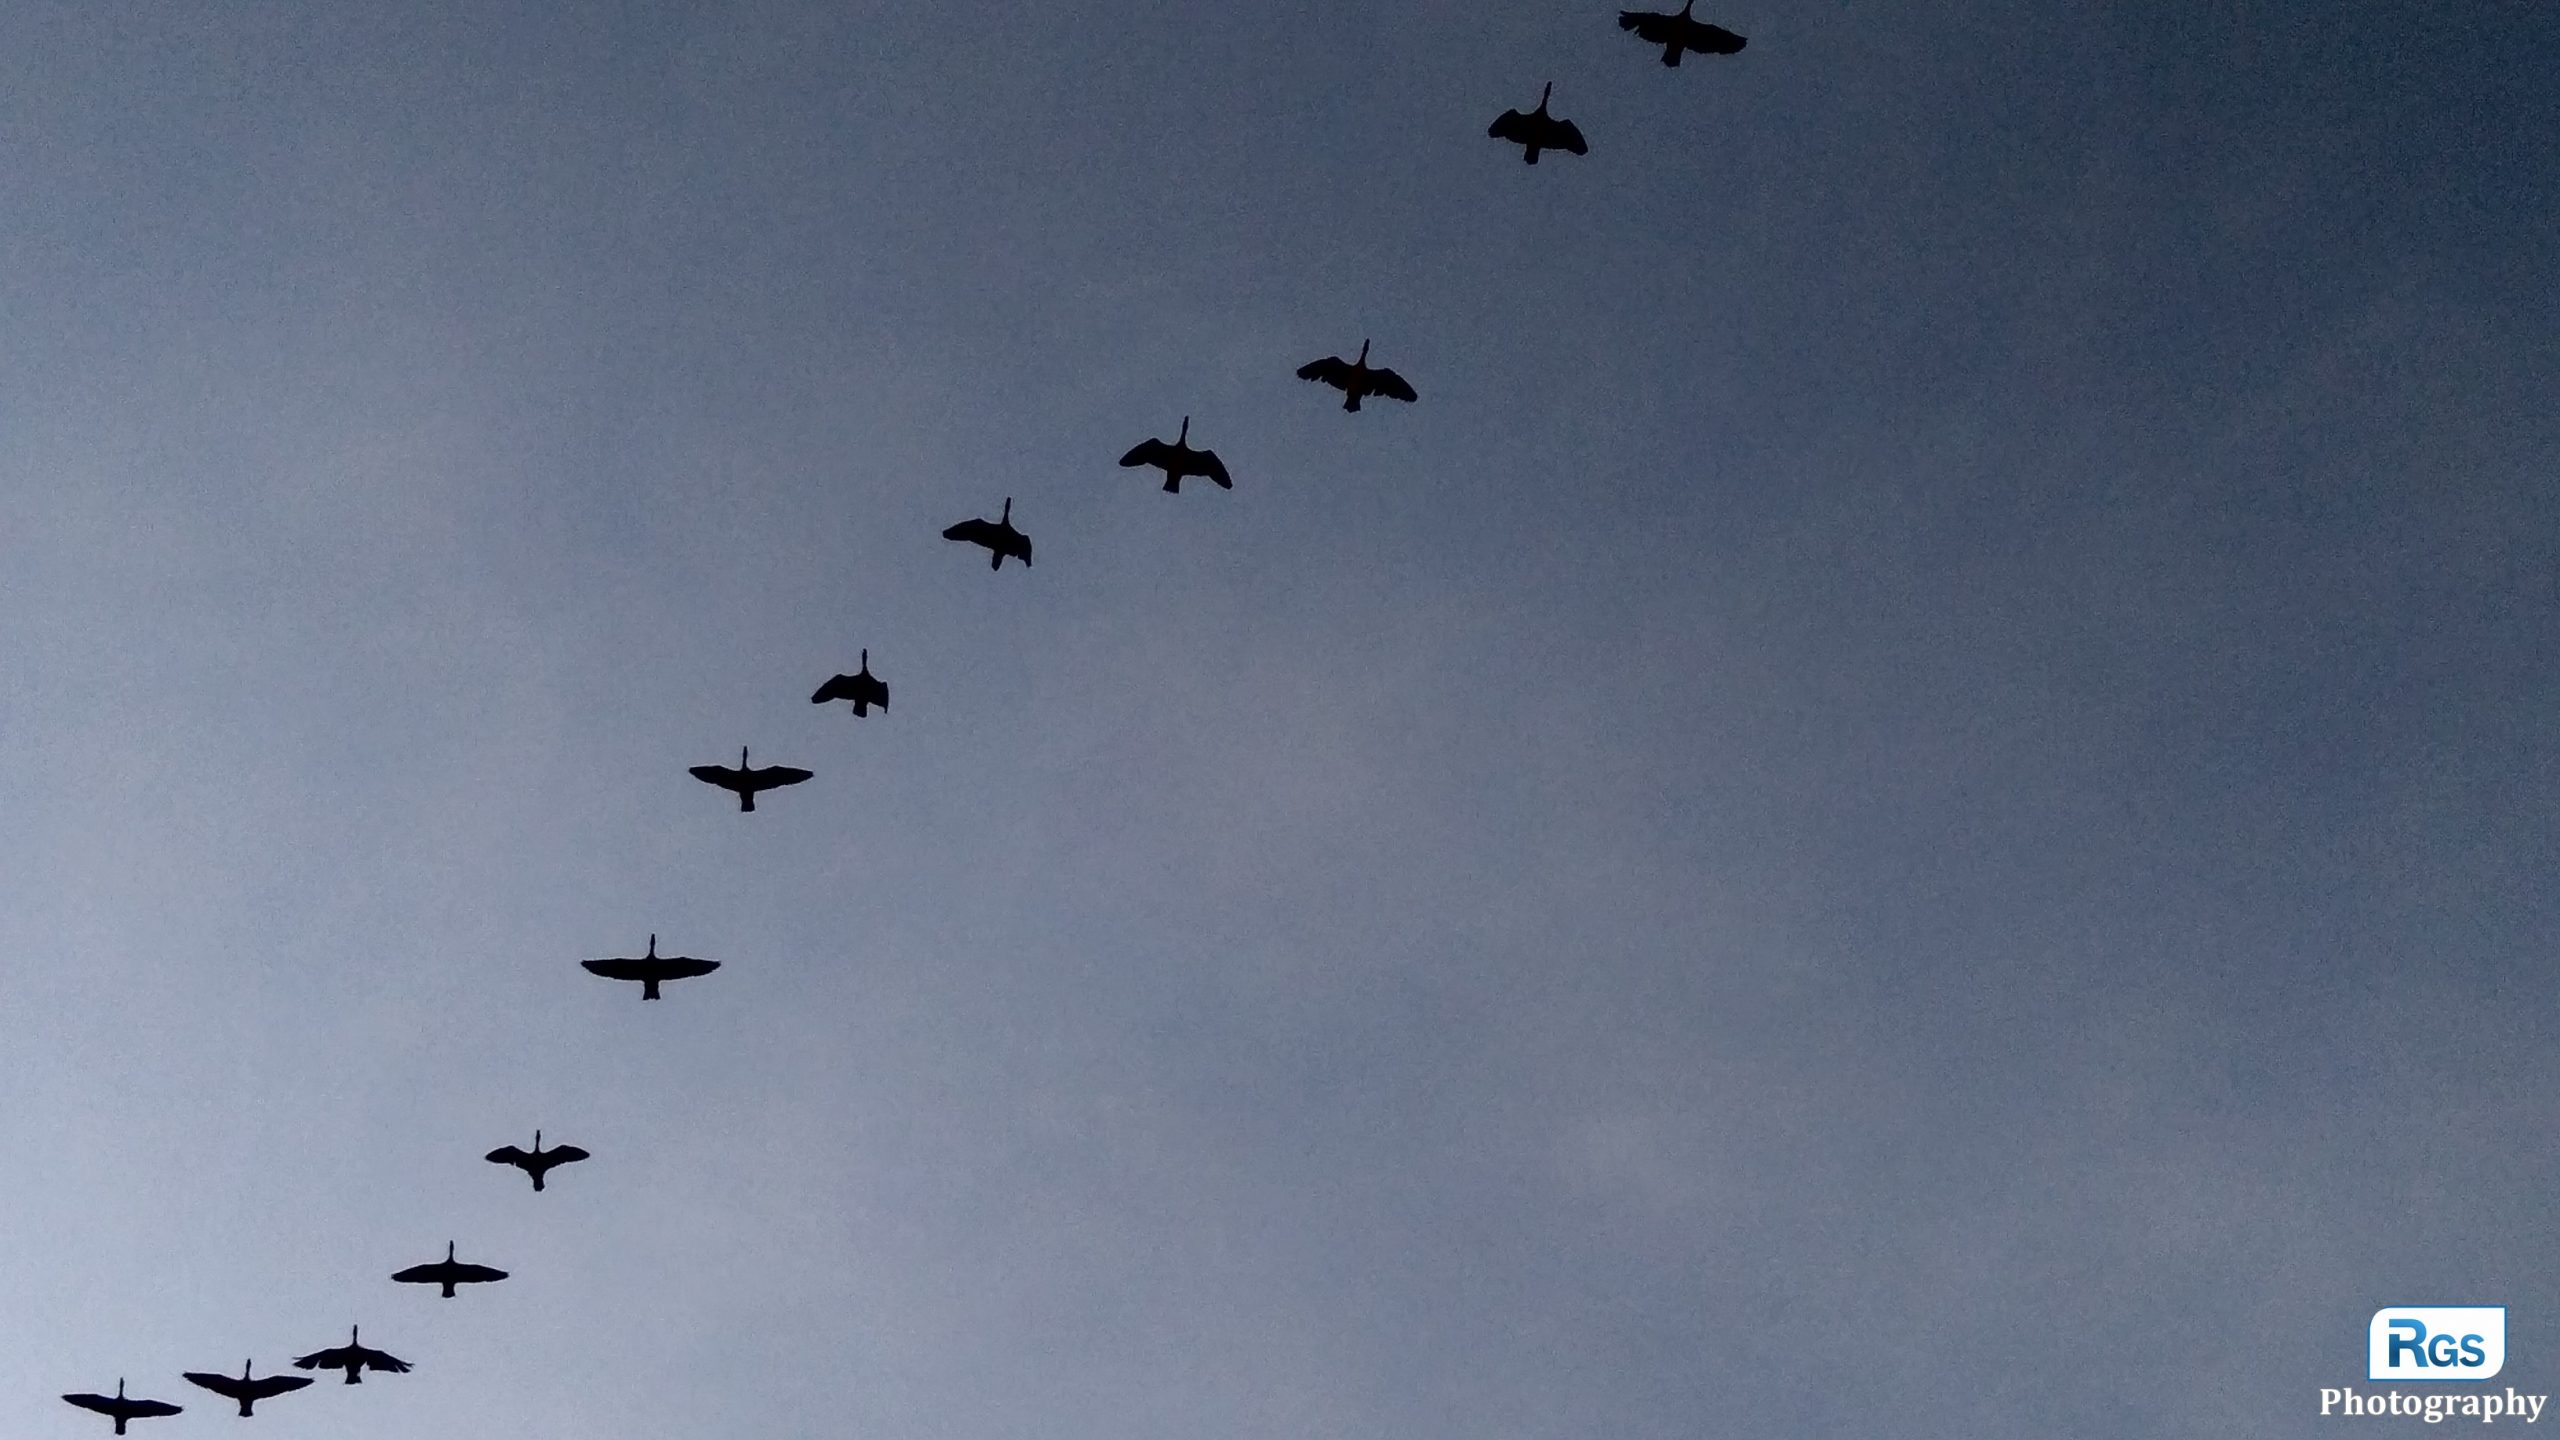 The Sky Birds